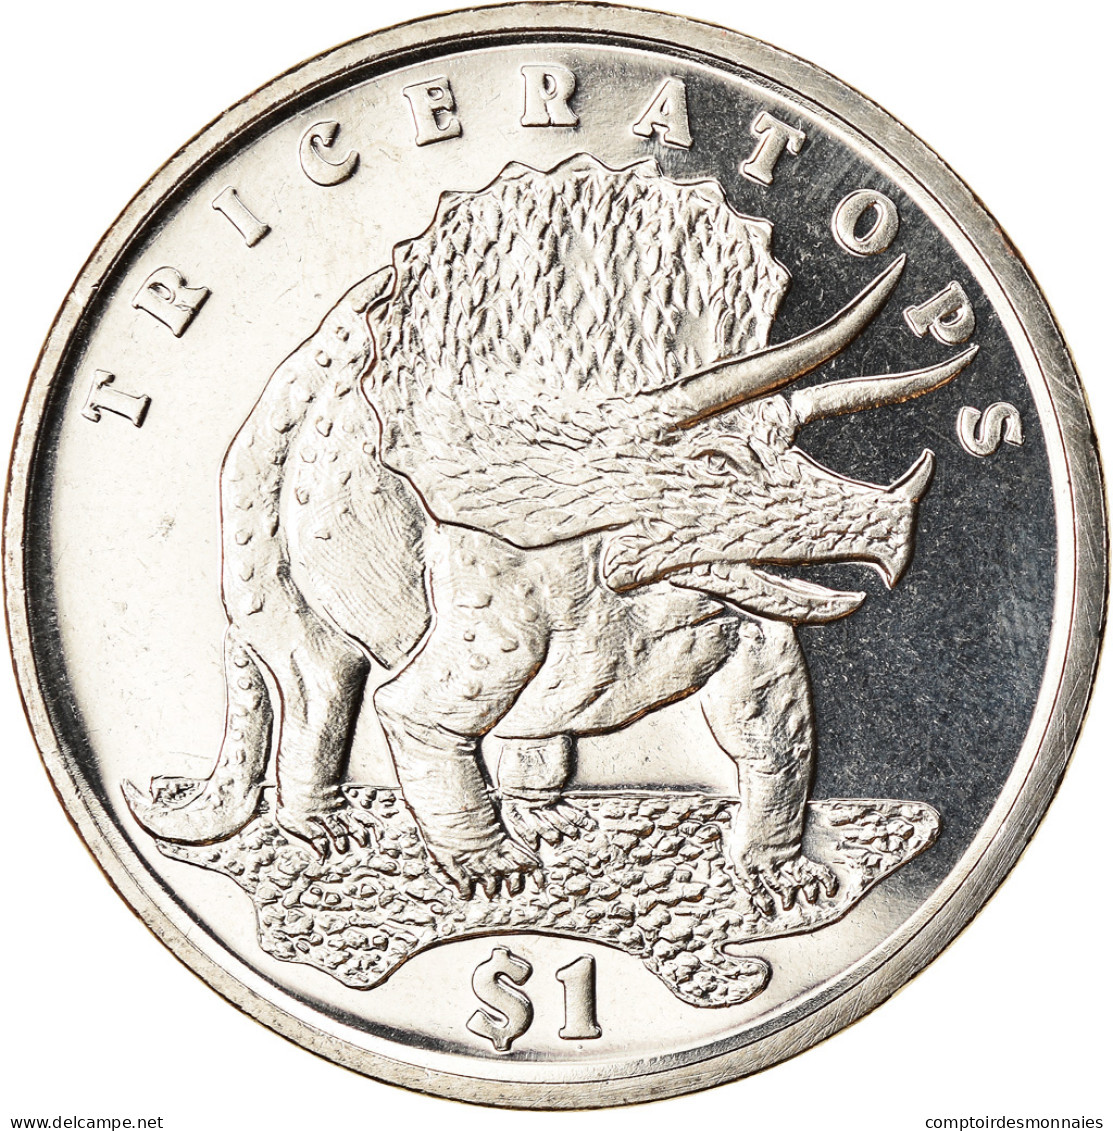 Monnaie, Sierra Leone, Dollar, 2006, Pobjoy Mint, Tricératops, SPL - Sierra Leone